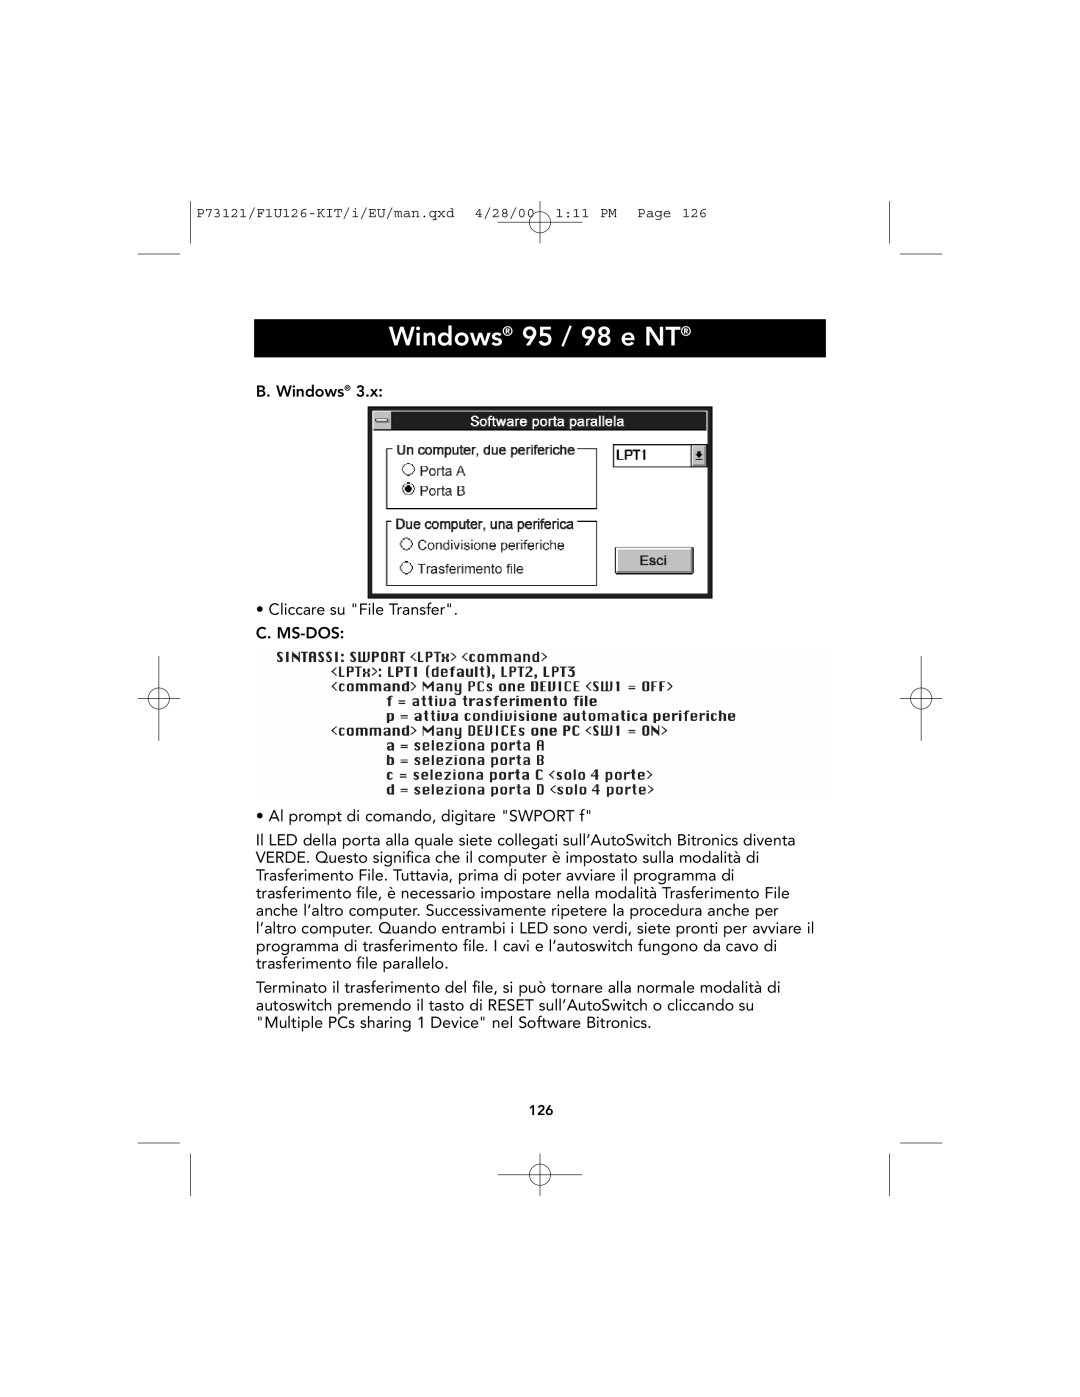 Belkin P73121, F1U126-KIT user manual Windows 95 / 98 e NT 